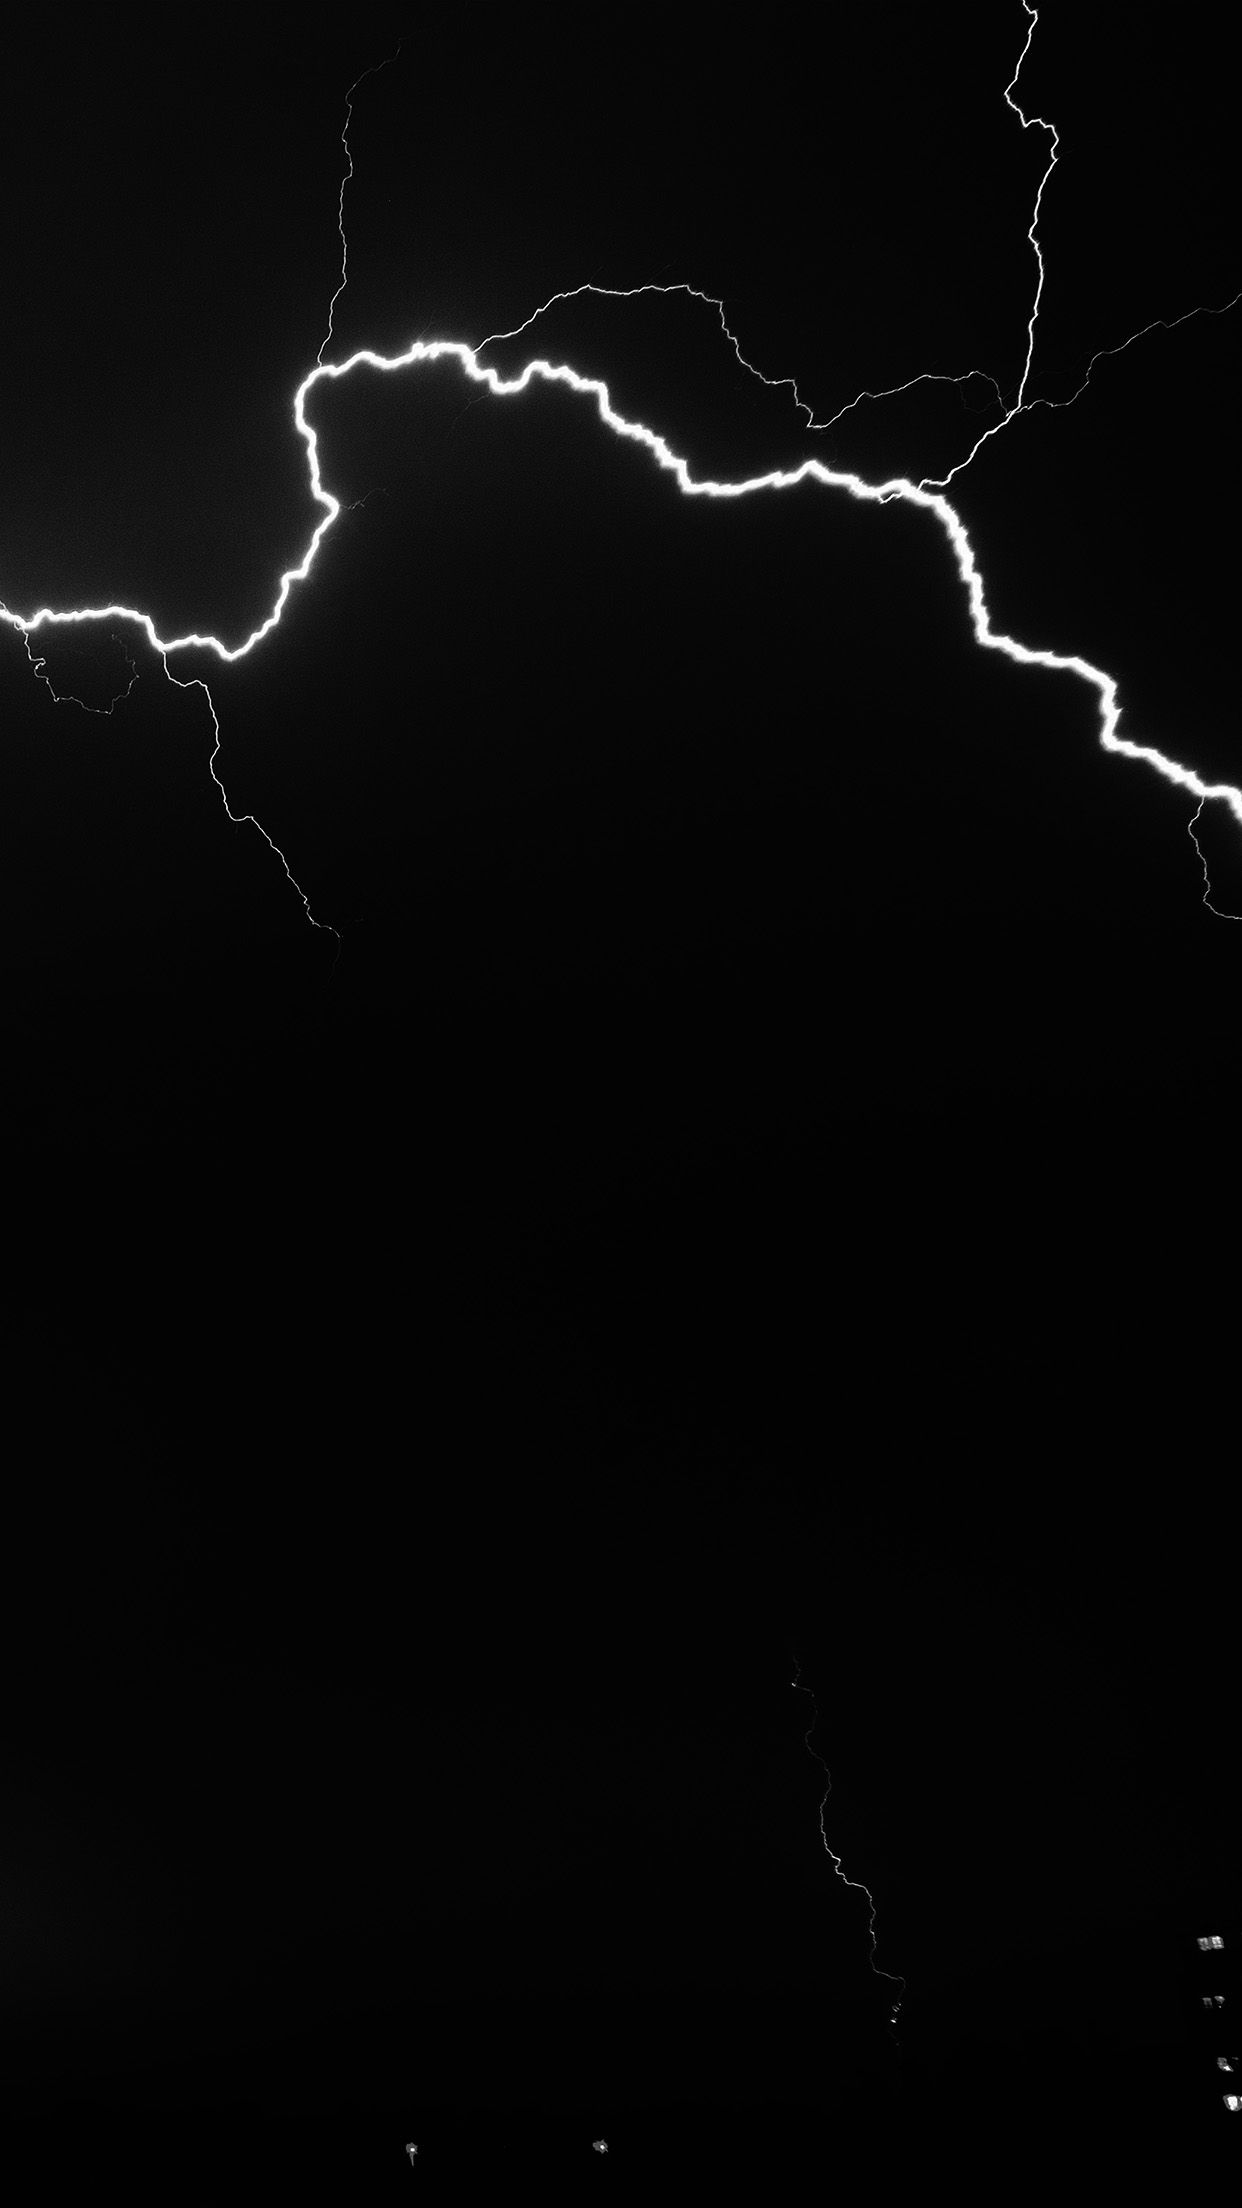 iPhone 6 wallpaper. lightening night sky storm nature dark bw